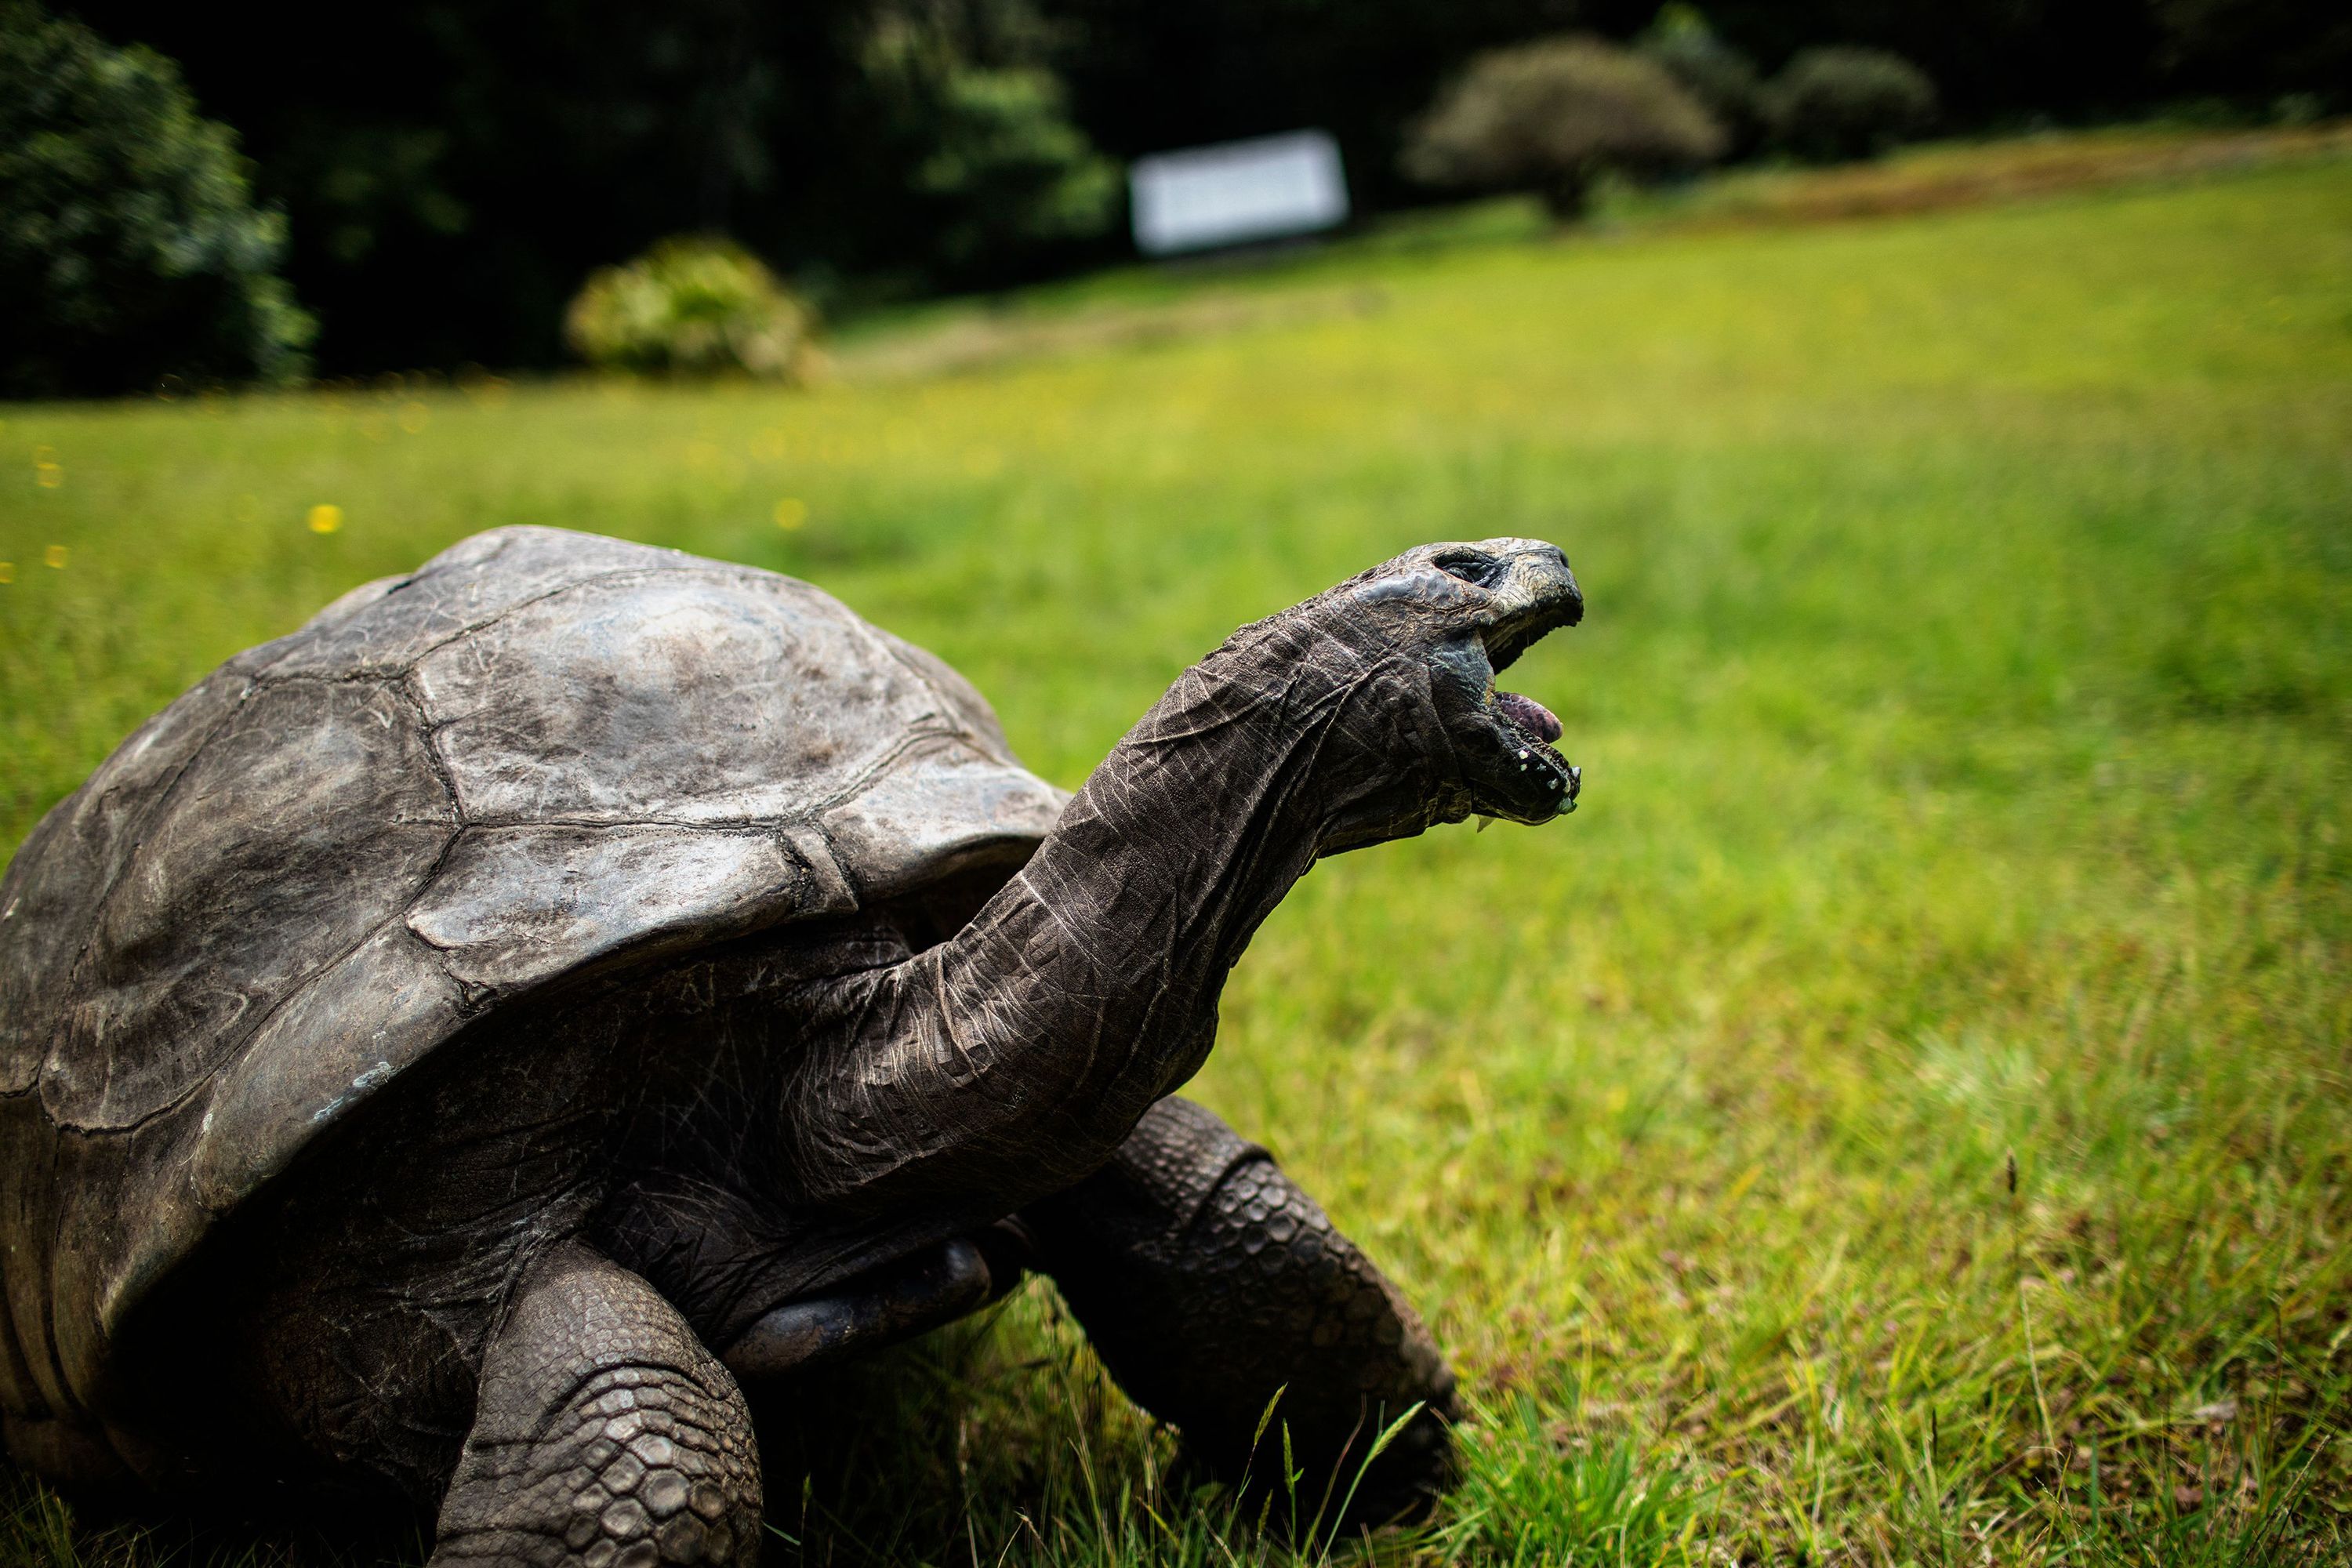 Jonathan the tortoise, world's oldest land animal, celebrates his 190th  birthday | CNN